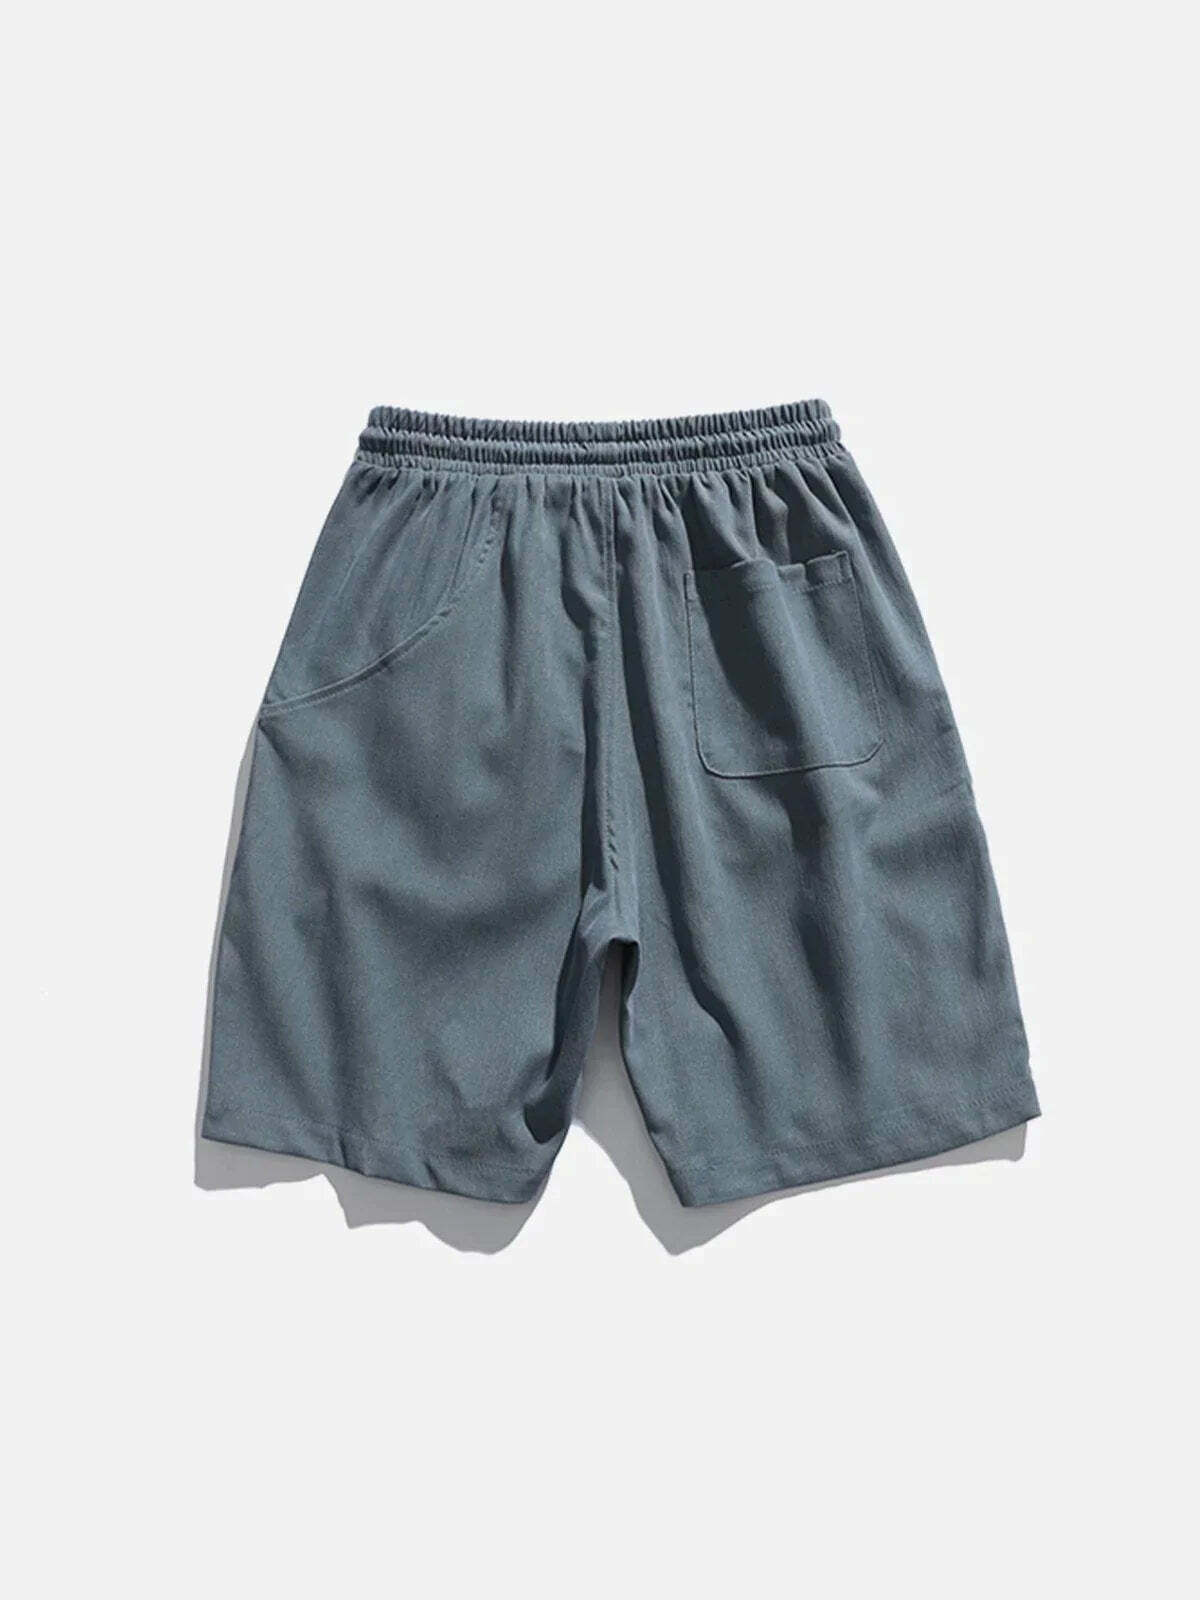 unique spliced drawstring shorts edgy & trendy streetwear 7619